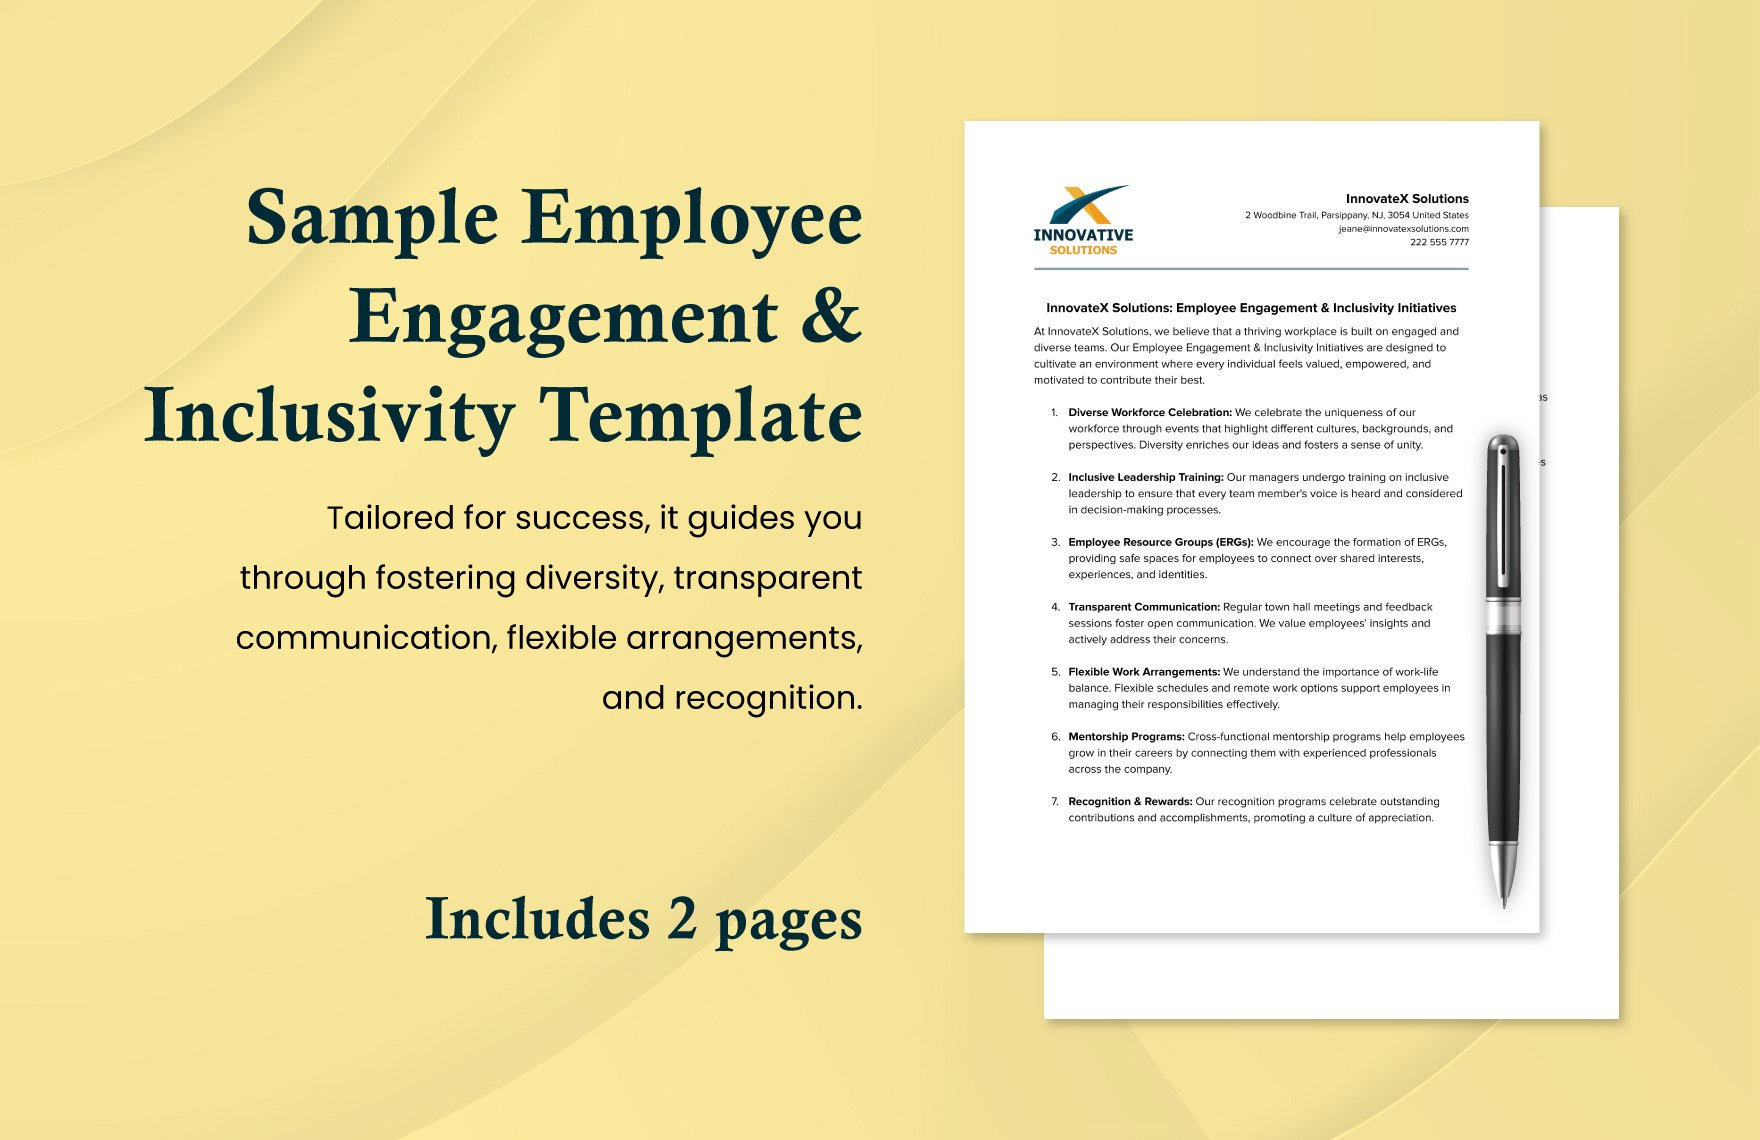 Sample Employee Engagement & Inclusivity Template